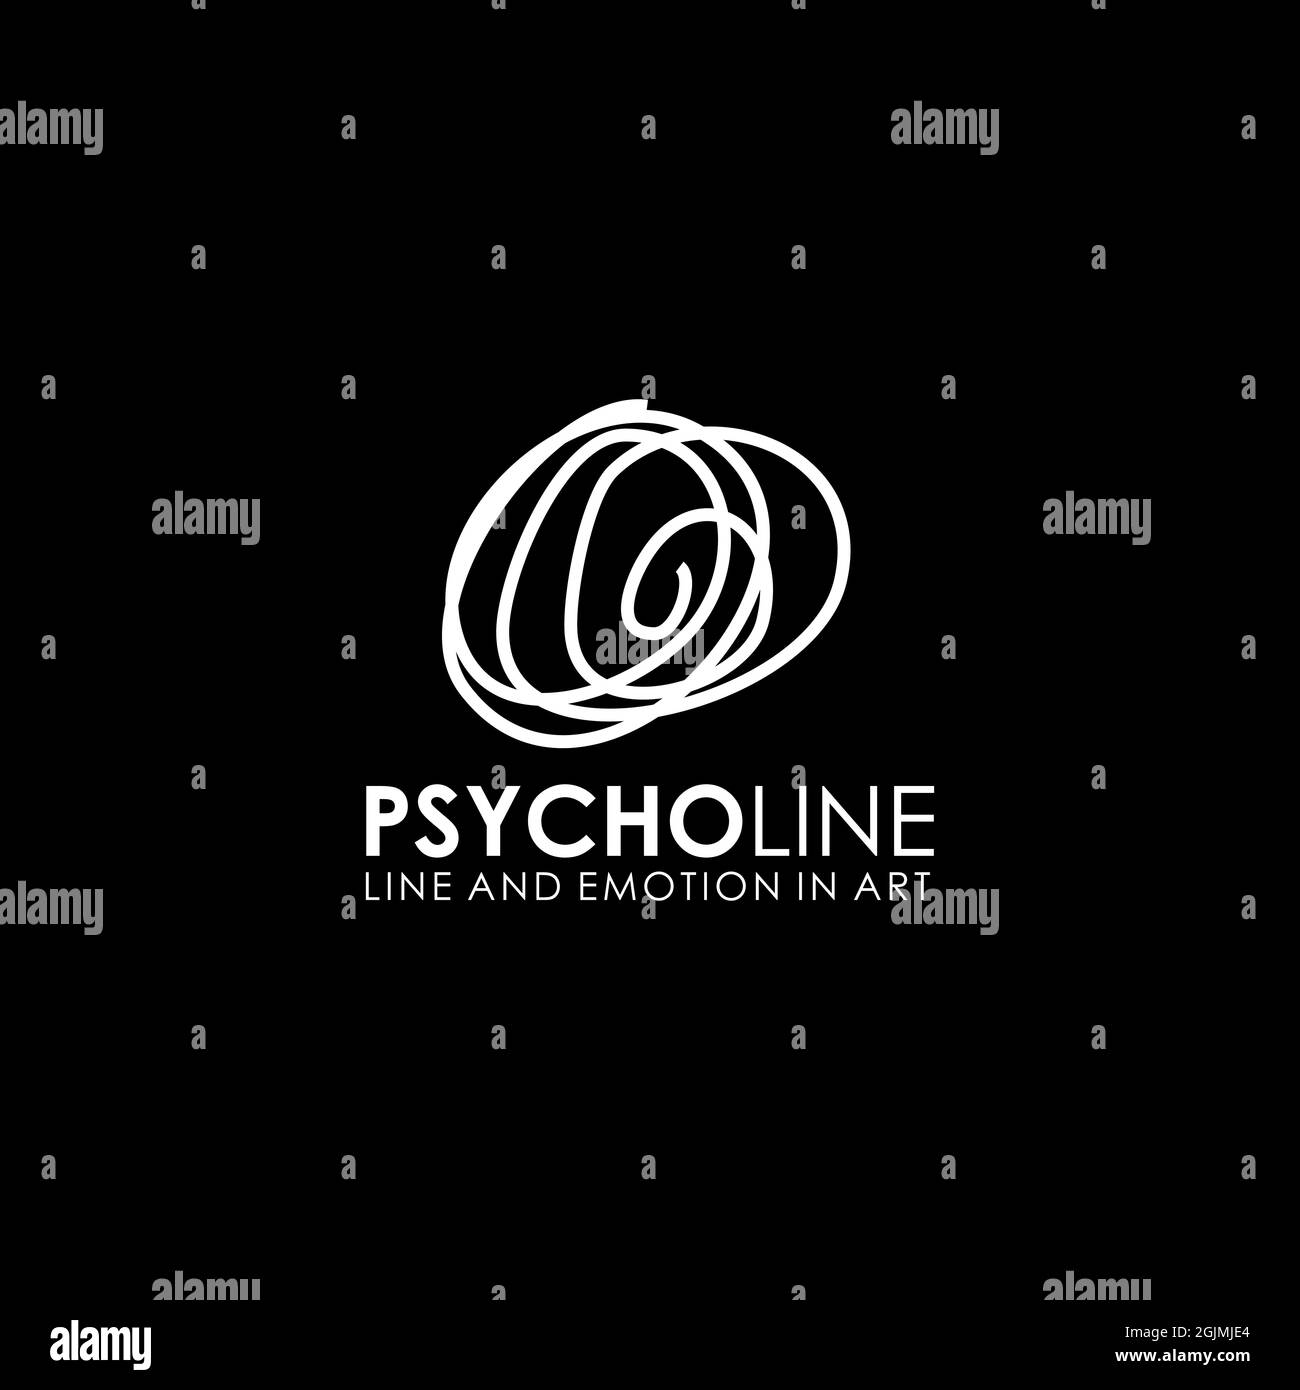 Psycholine Logo Design Illustration Vector Template Stock Vector Image And Art Alamy 9230